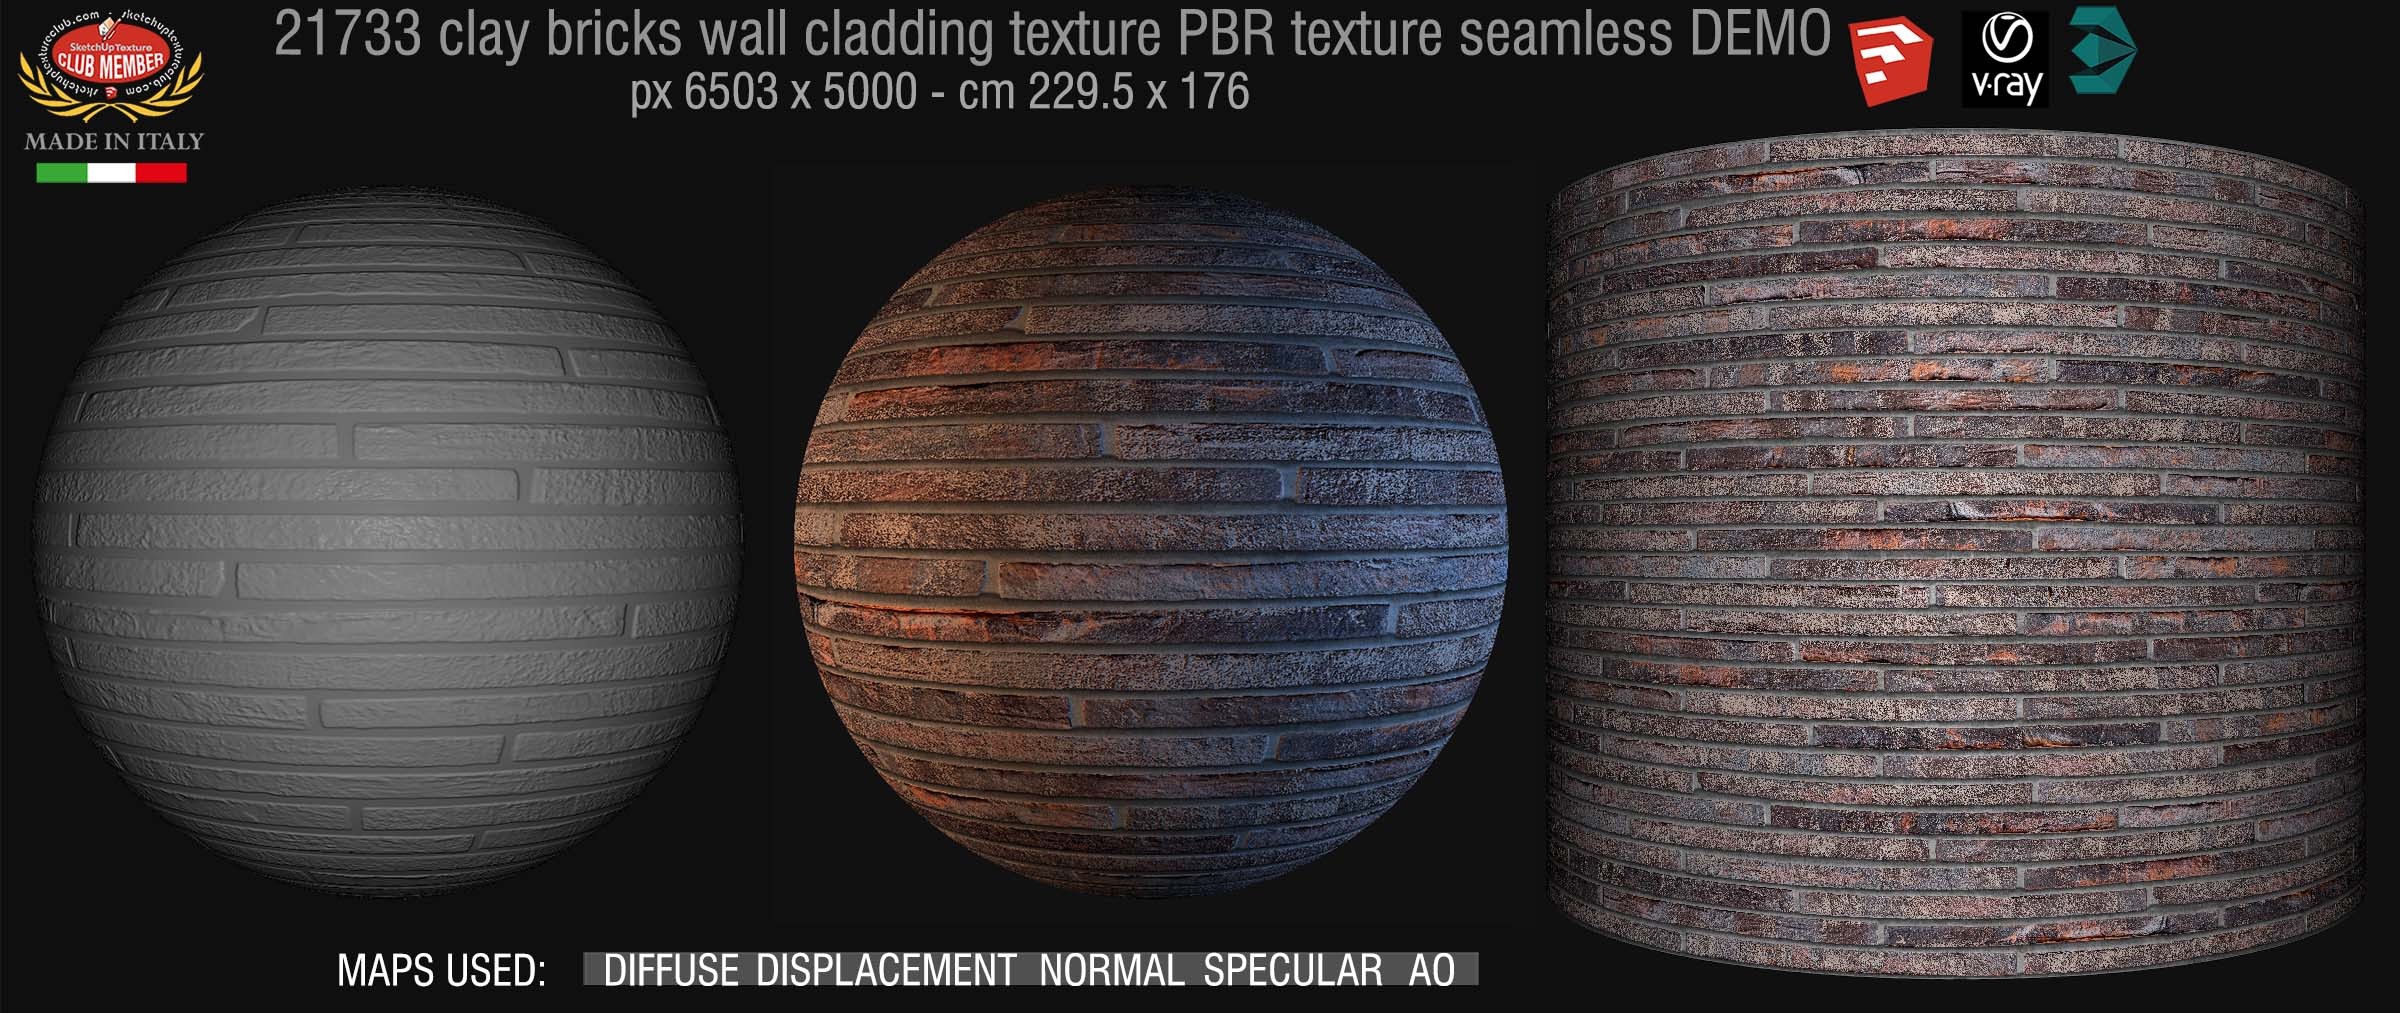 21733 Clay bricks wall cladding PBR texture seamless DEMO